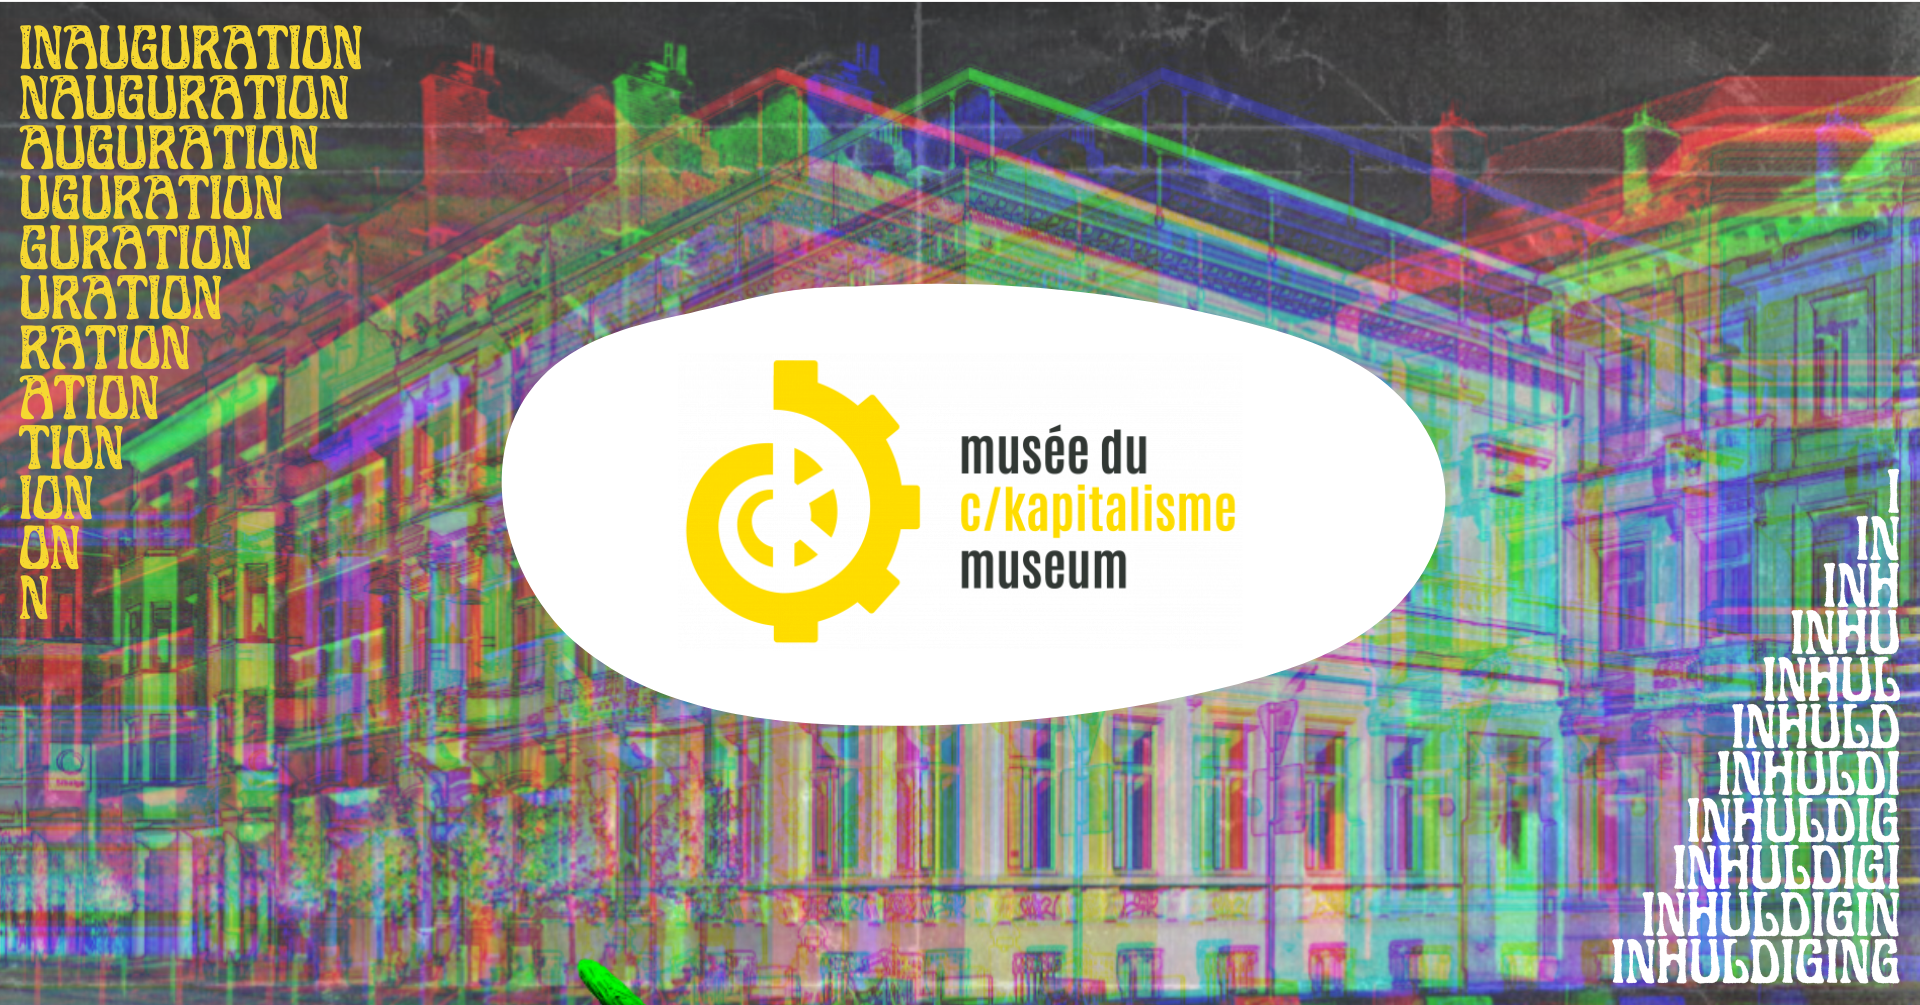 Inauguration Musée du Capitalisme